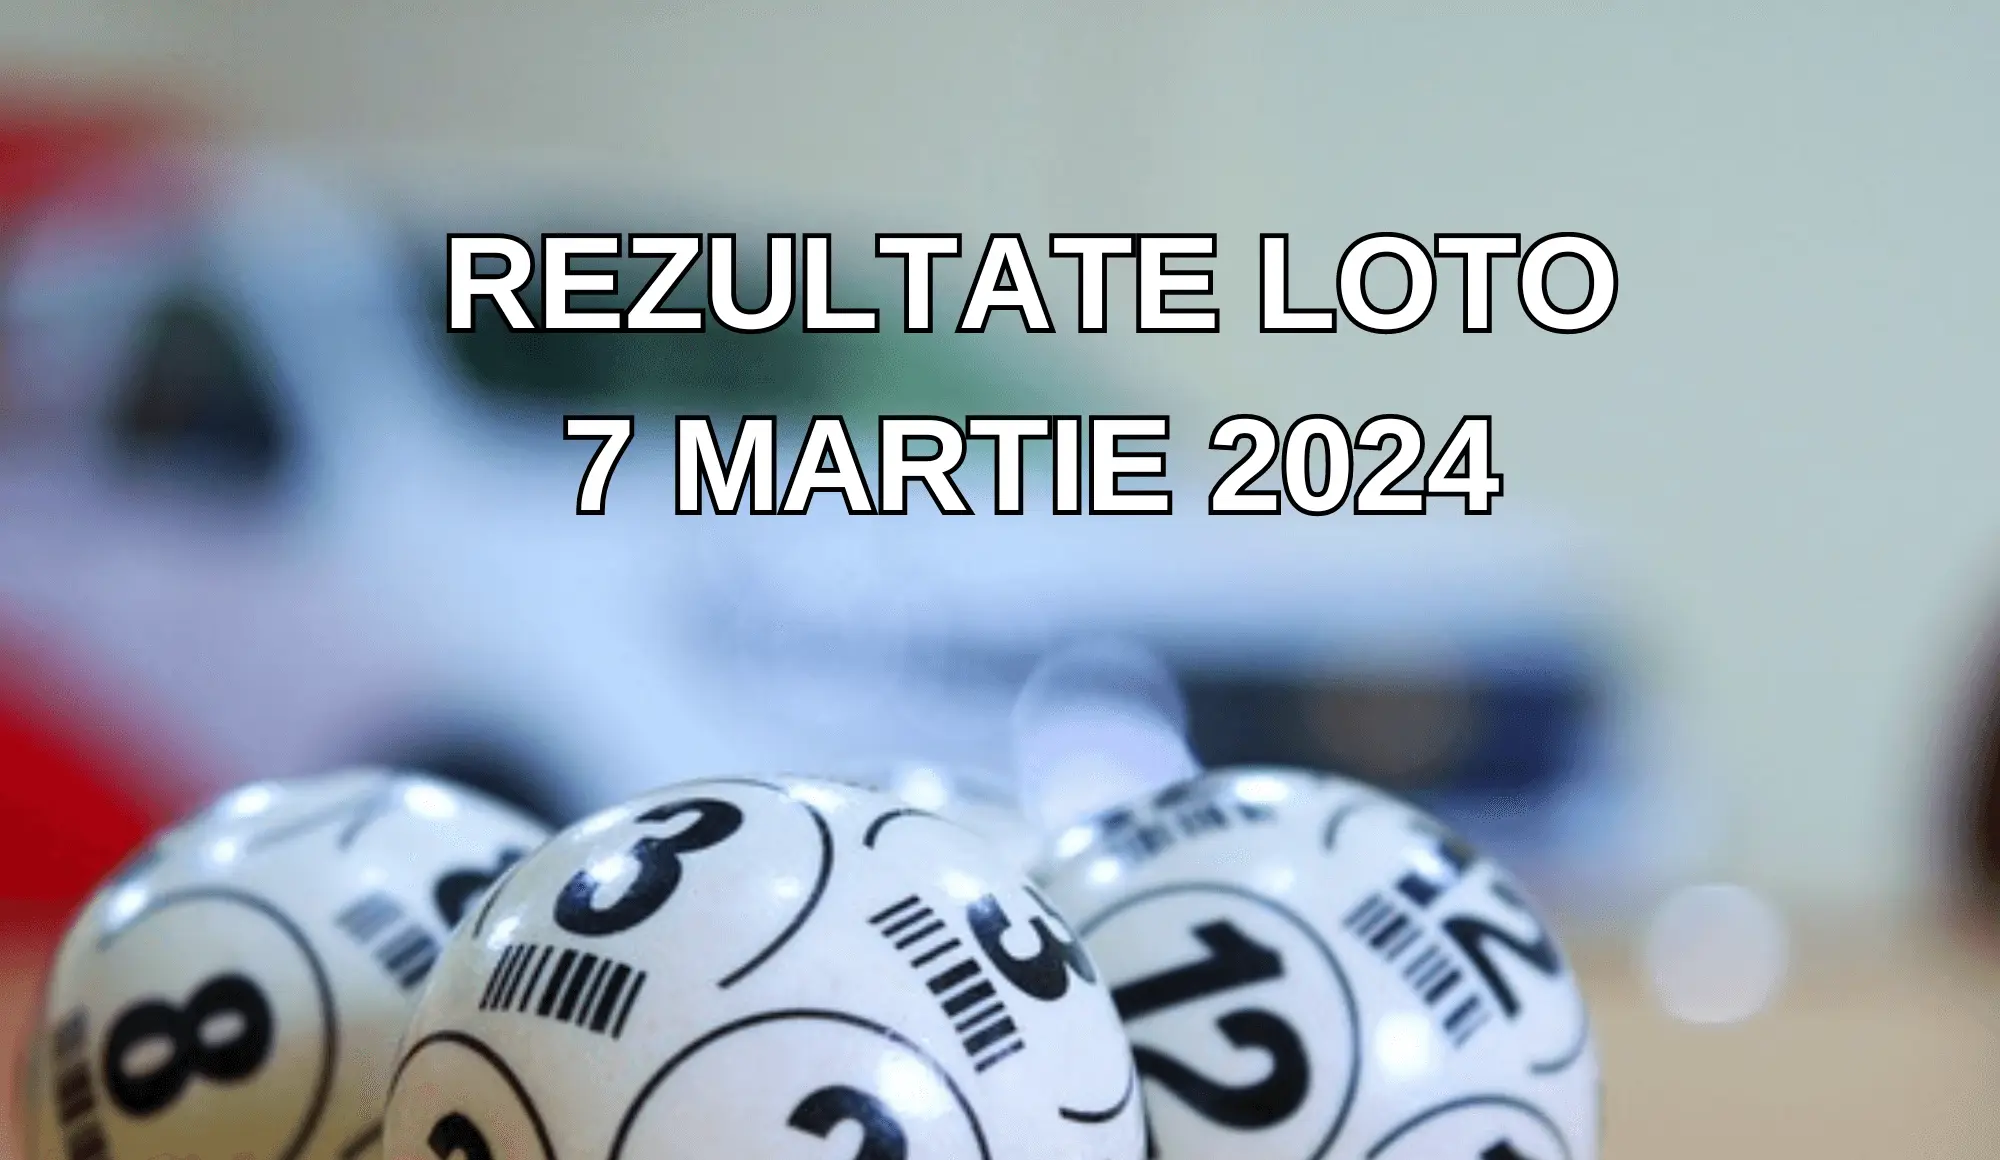 Rezultate Loto 7 martie 2024 – Loto 6/49, Loto 5/40, Joker și Noroc